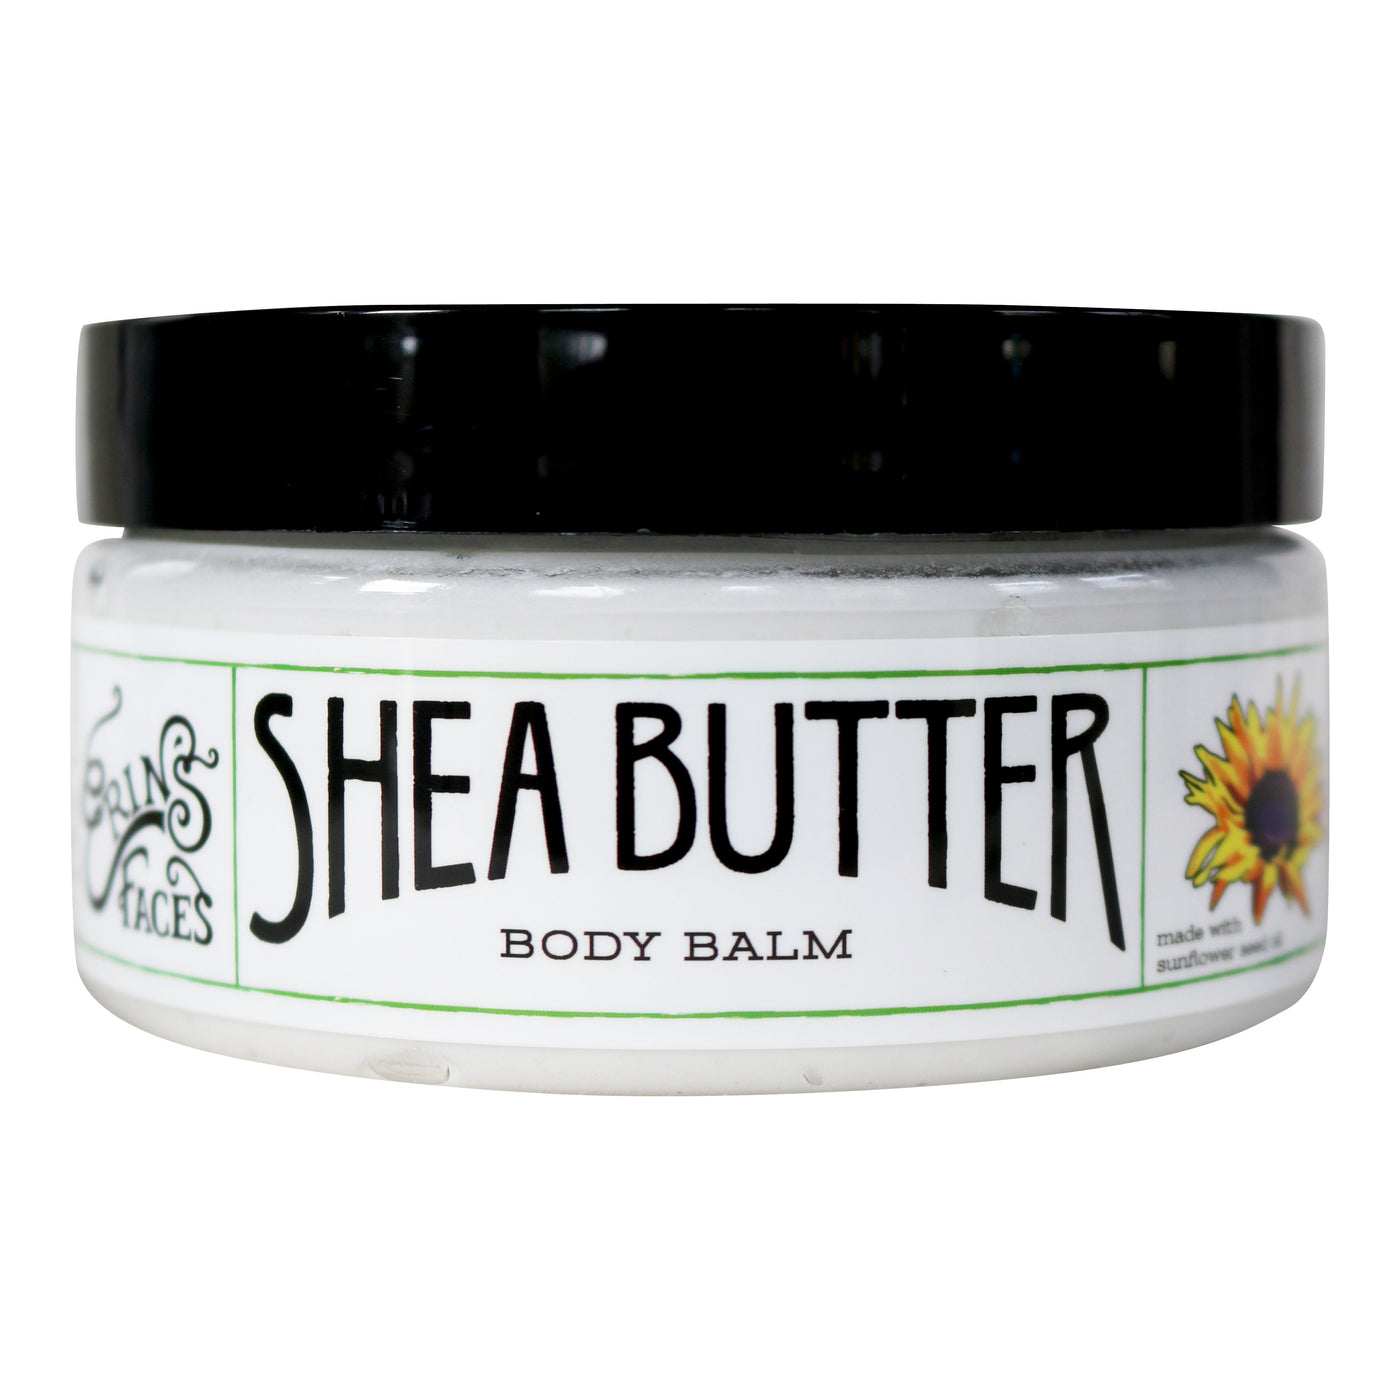 closed 4oz jar of vegan shea  butter body moisturizer